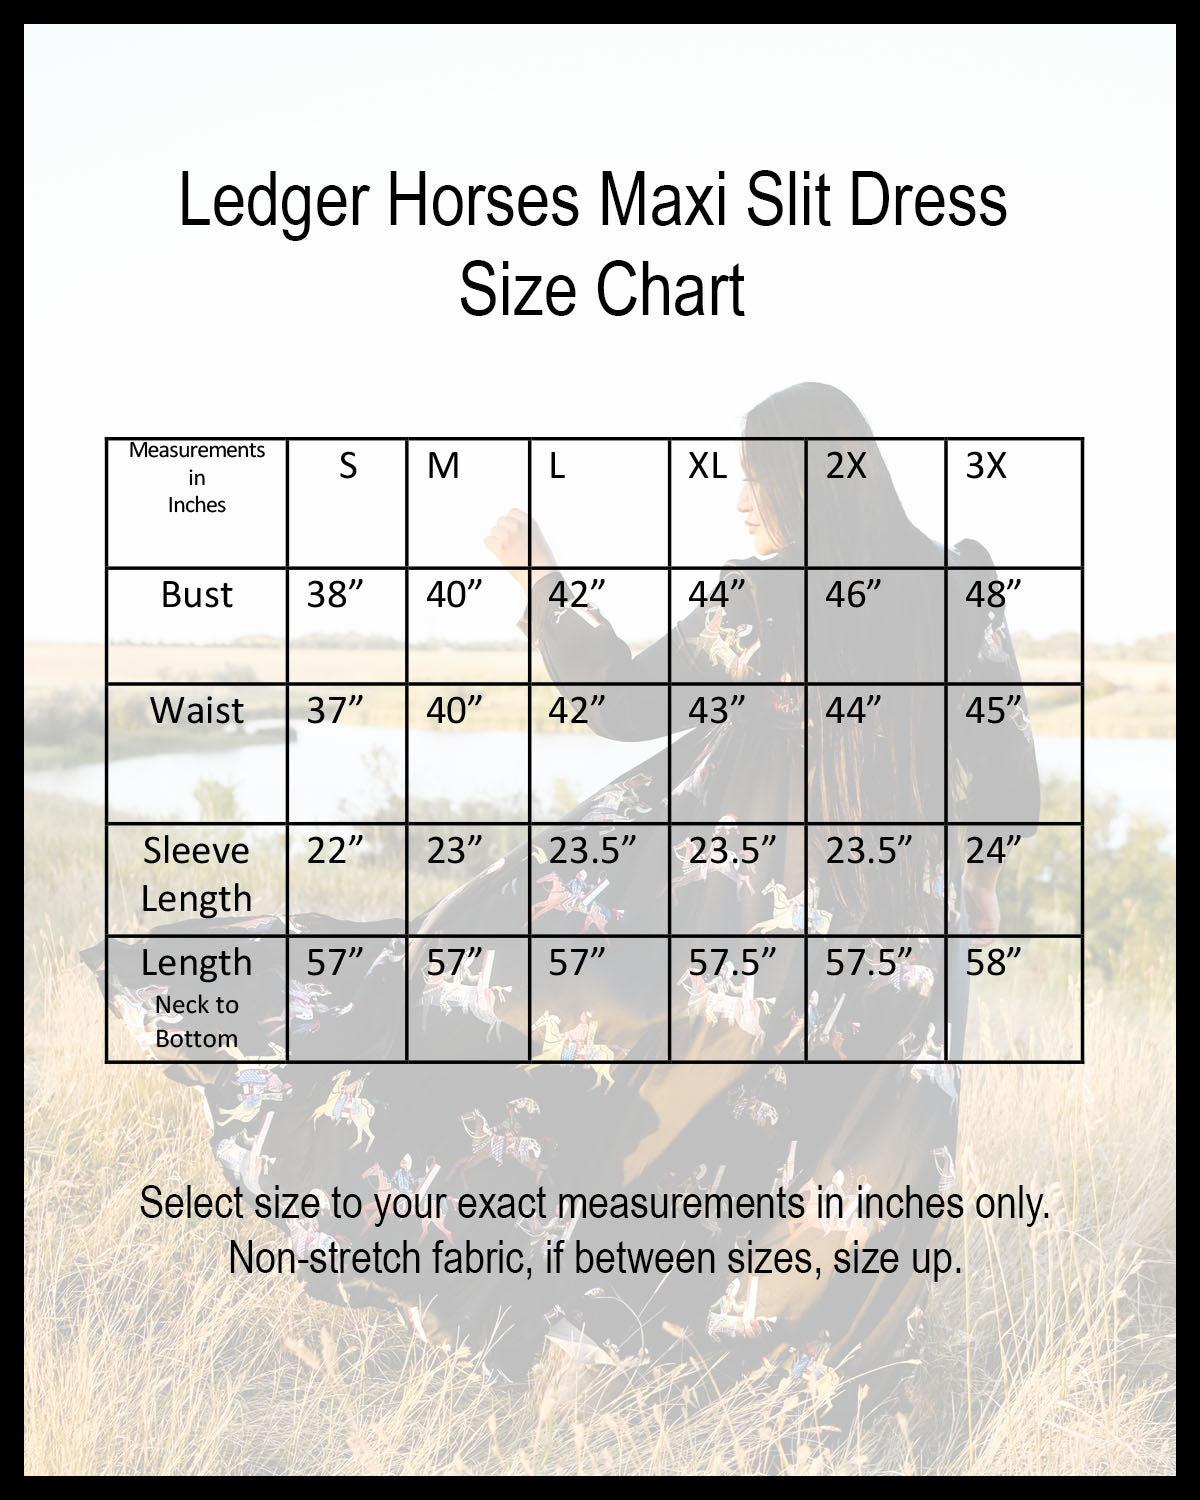 Ledger Horses Maxi Slit Dress